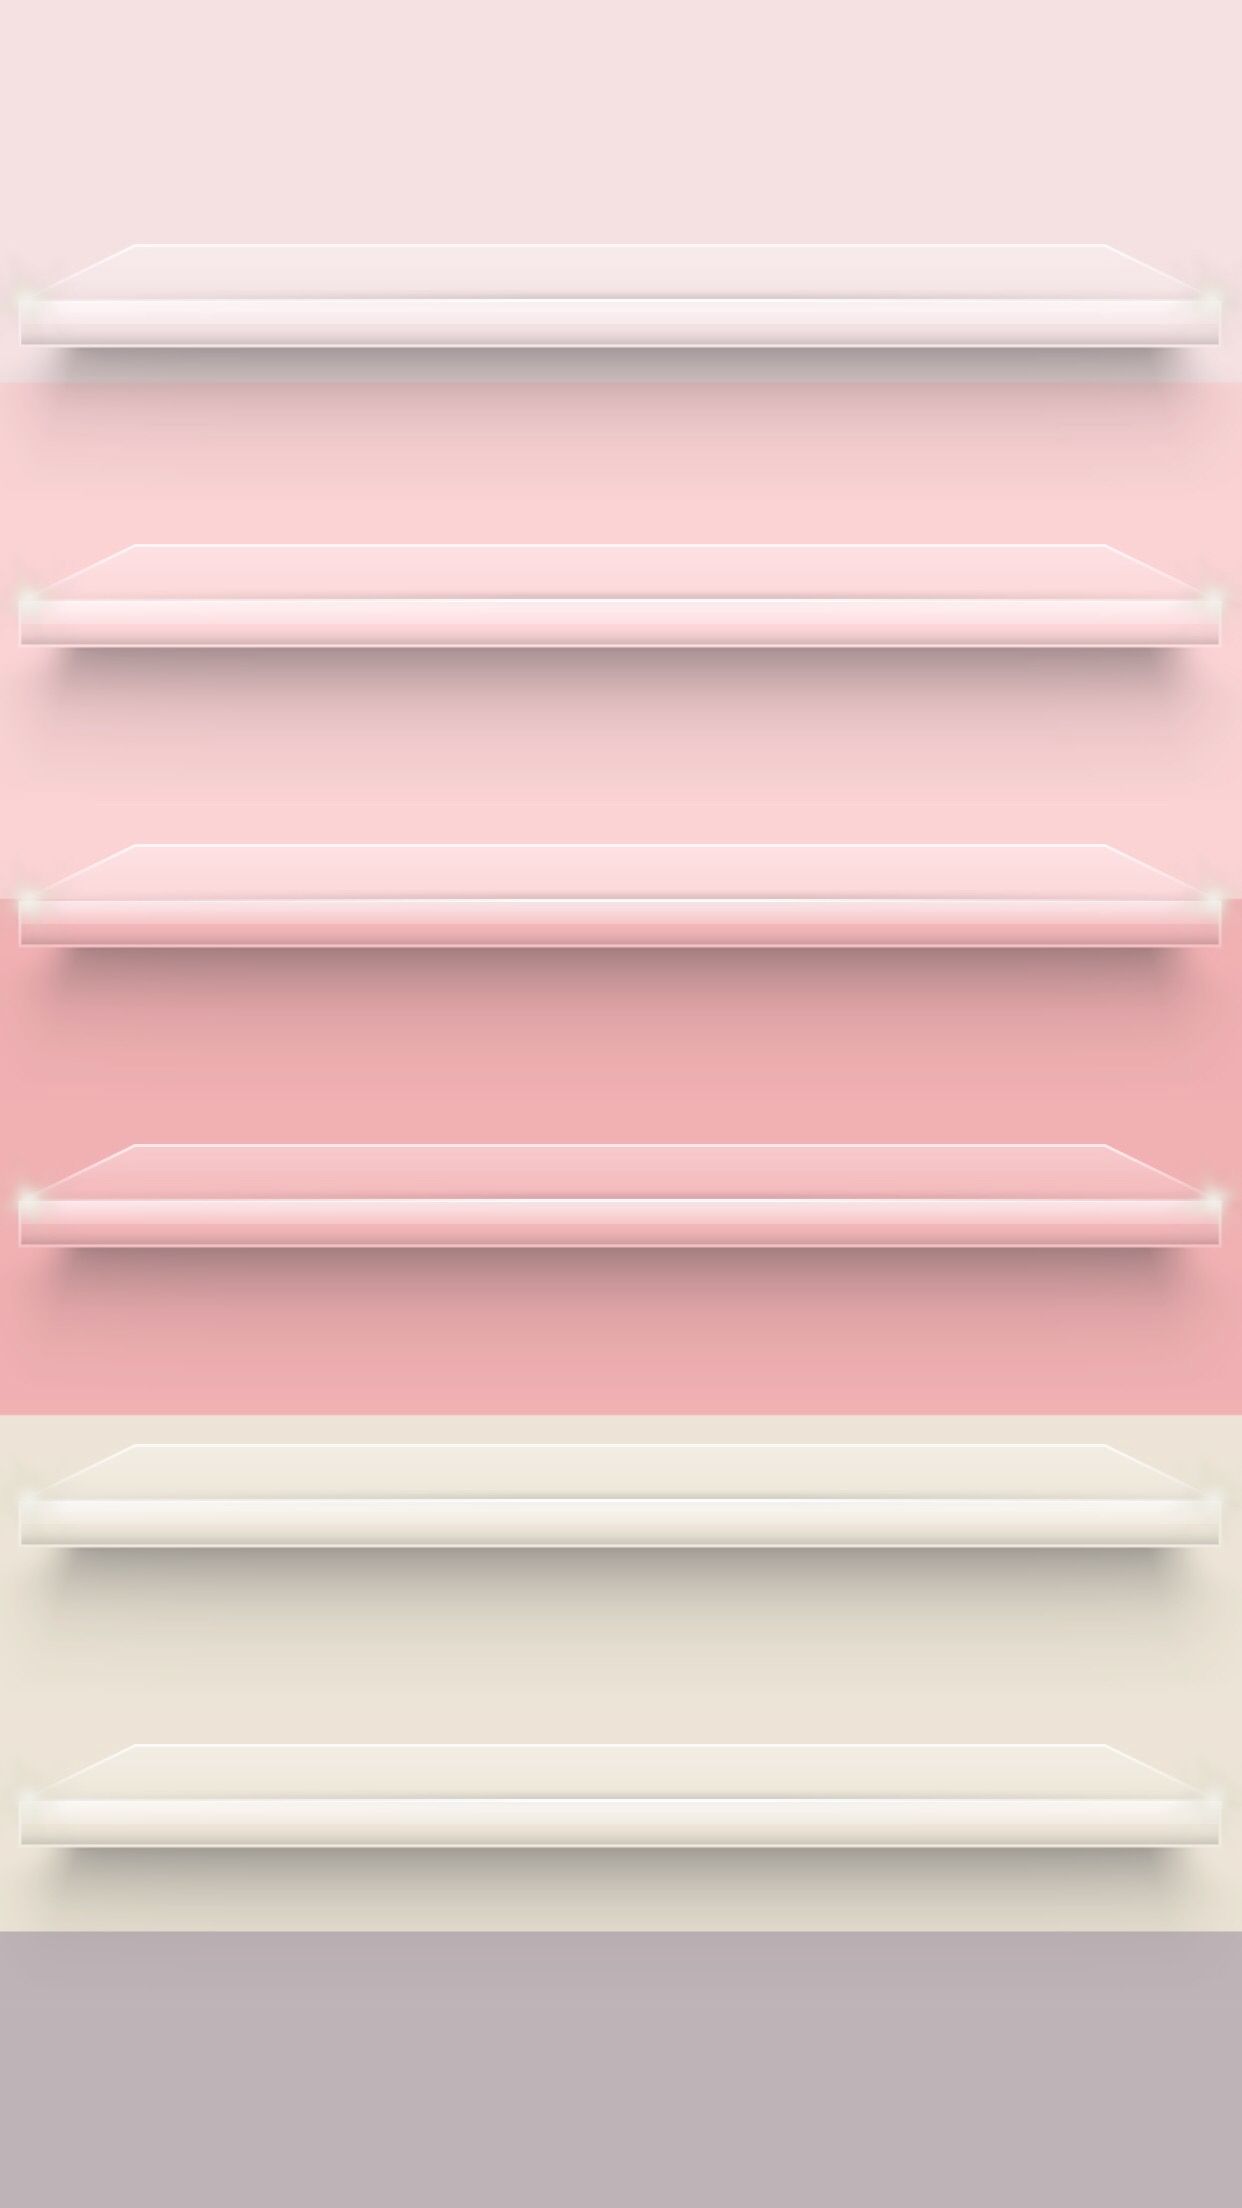 Striped home screen. iPhone homescreen wallpaper, iPhone 7 plus